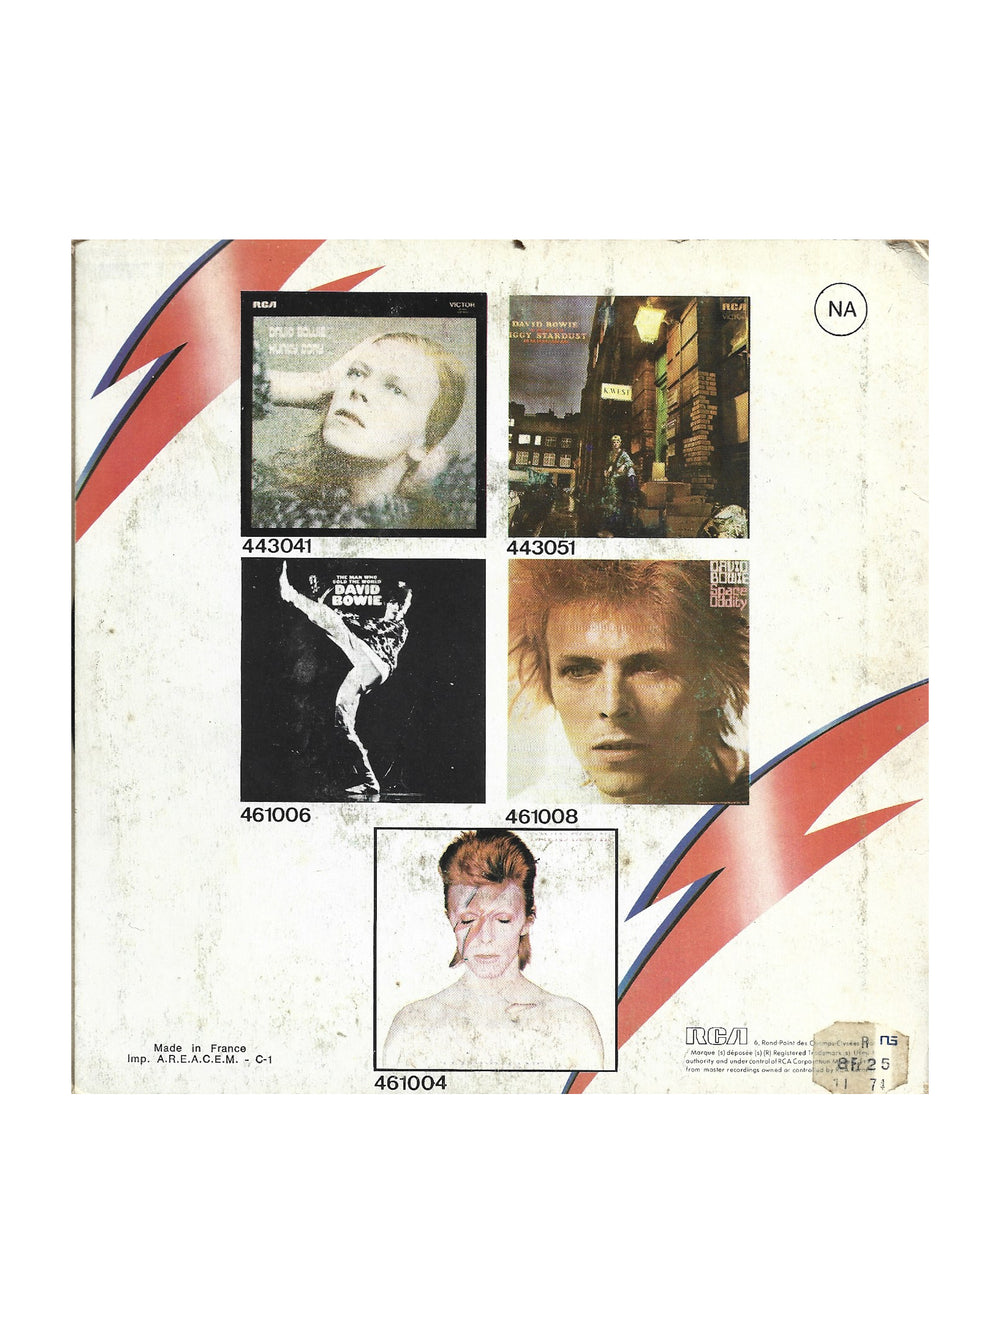 David Bowie - Rebel Rebel 7 Inch Vinyl RCA France Preloved: 1974